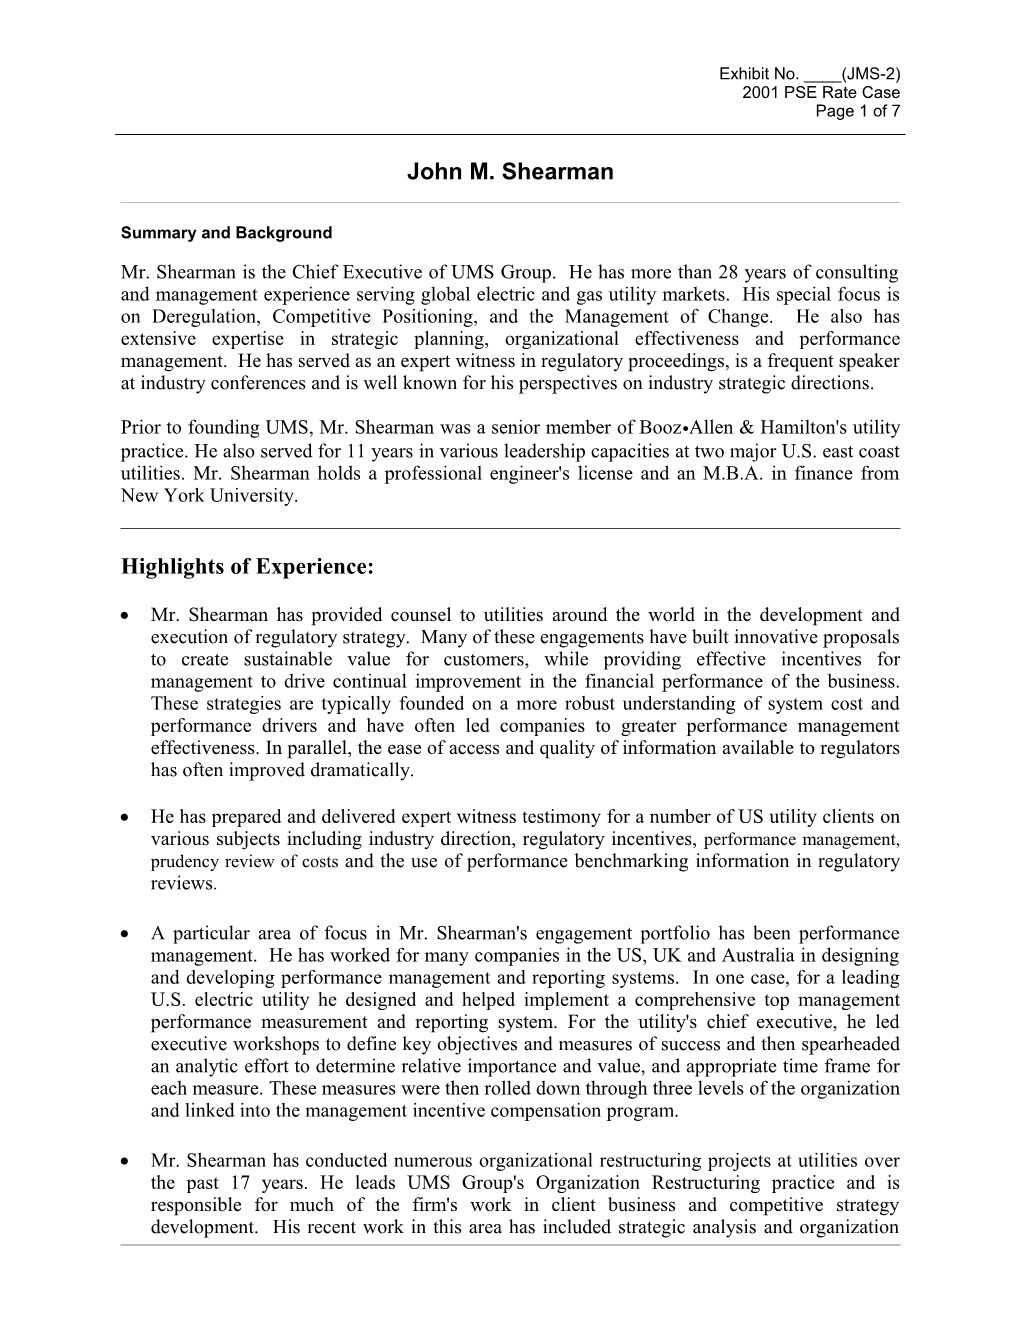 GRC JMS-2 (Shearman Qualifications)